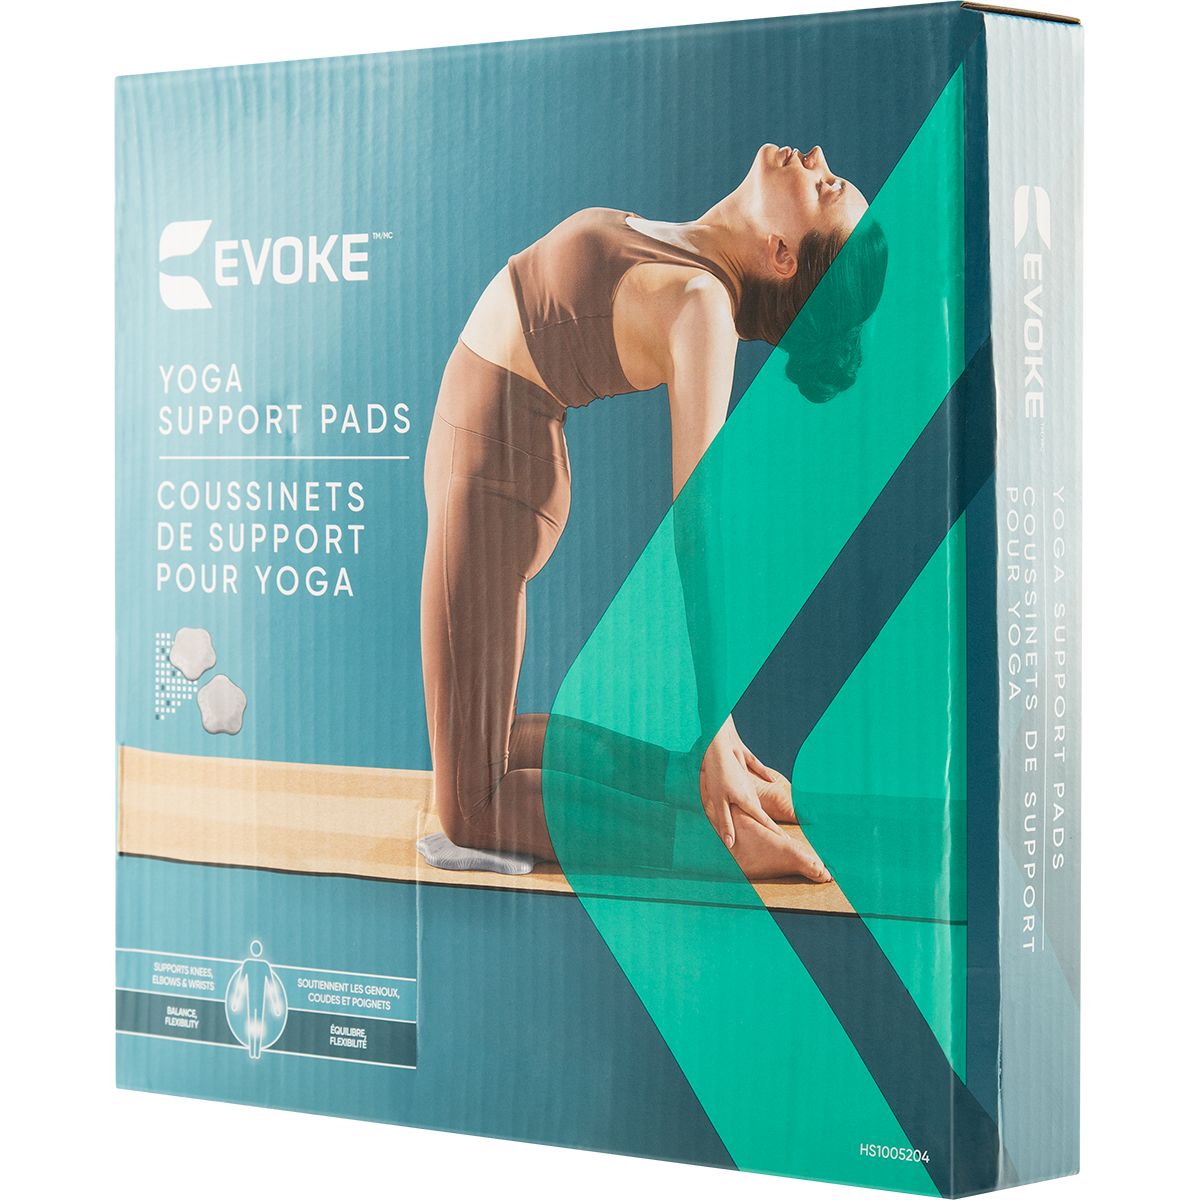 GoYonder Yoga Knee Pads 2 Pack, Yoga Knee Cushion Thick Exercise Pads for  Knees Elbows Wrist Hands Head Foam Pilates Kneeling pad Black